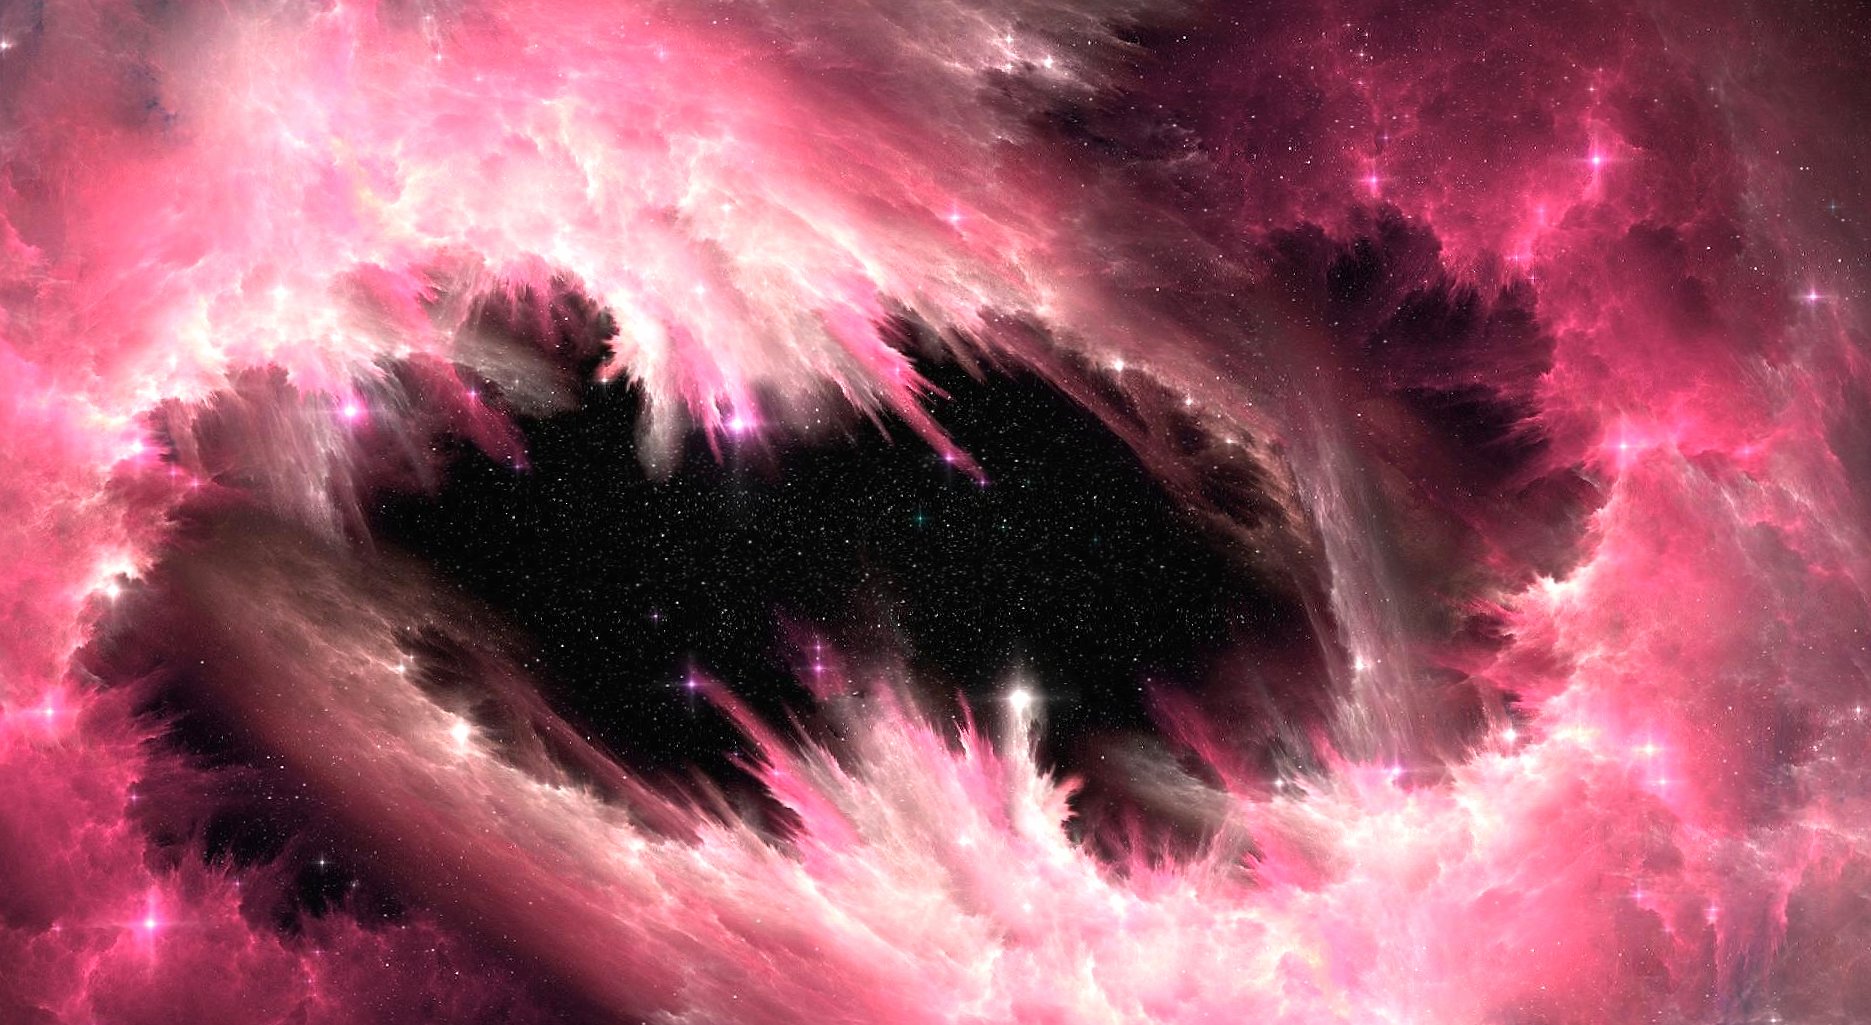 Pink nebula at 1024 x 1024 iPad size wallpapers HD quality